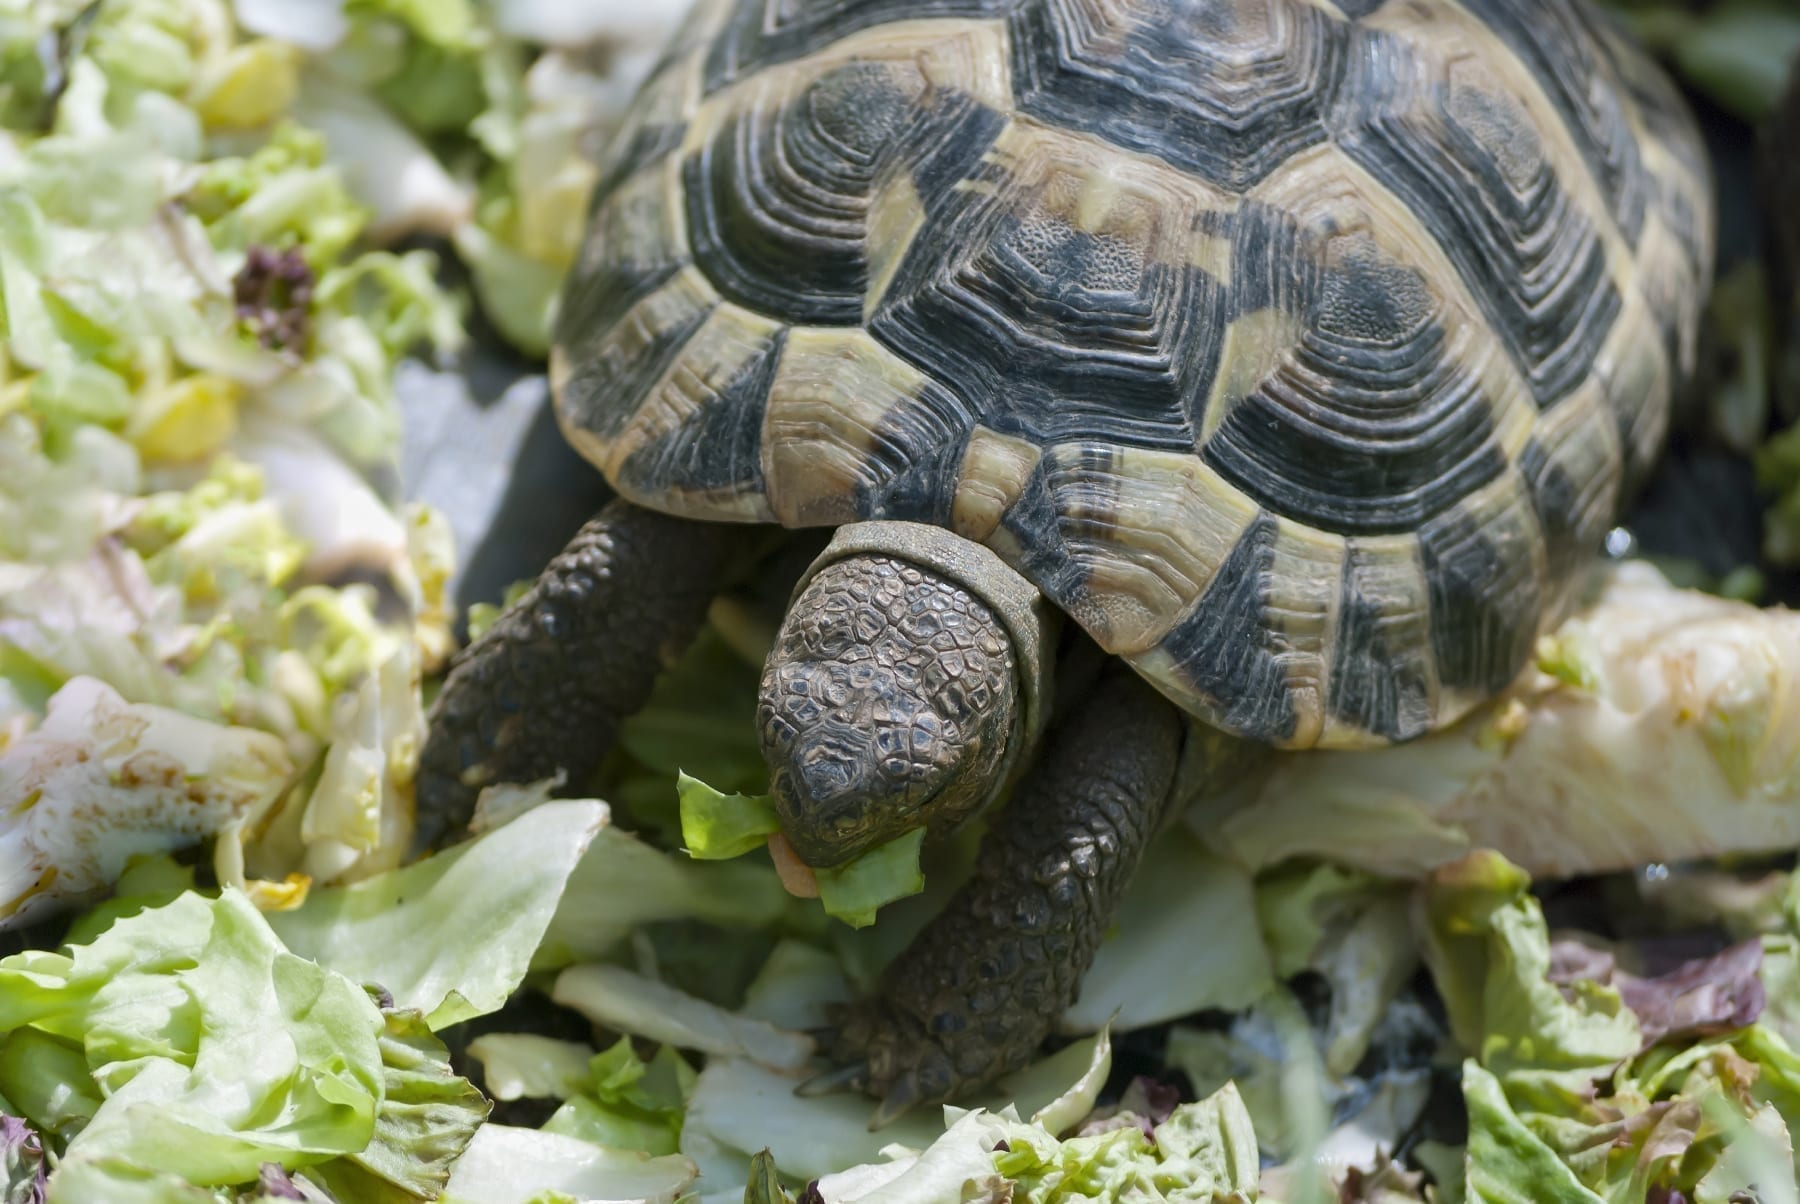 Turtle enjoying a dinner of greens